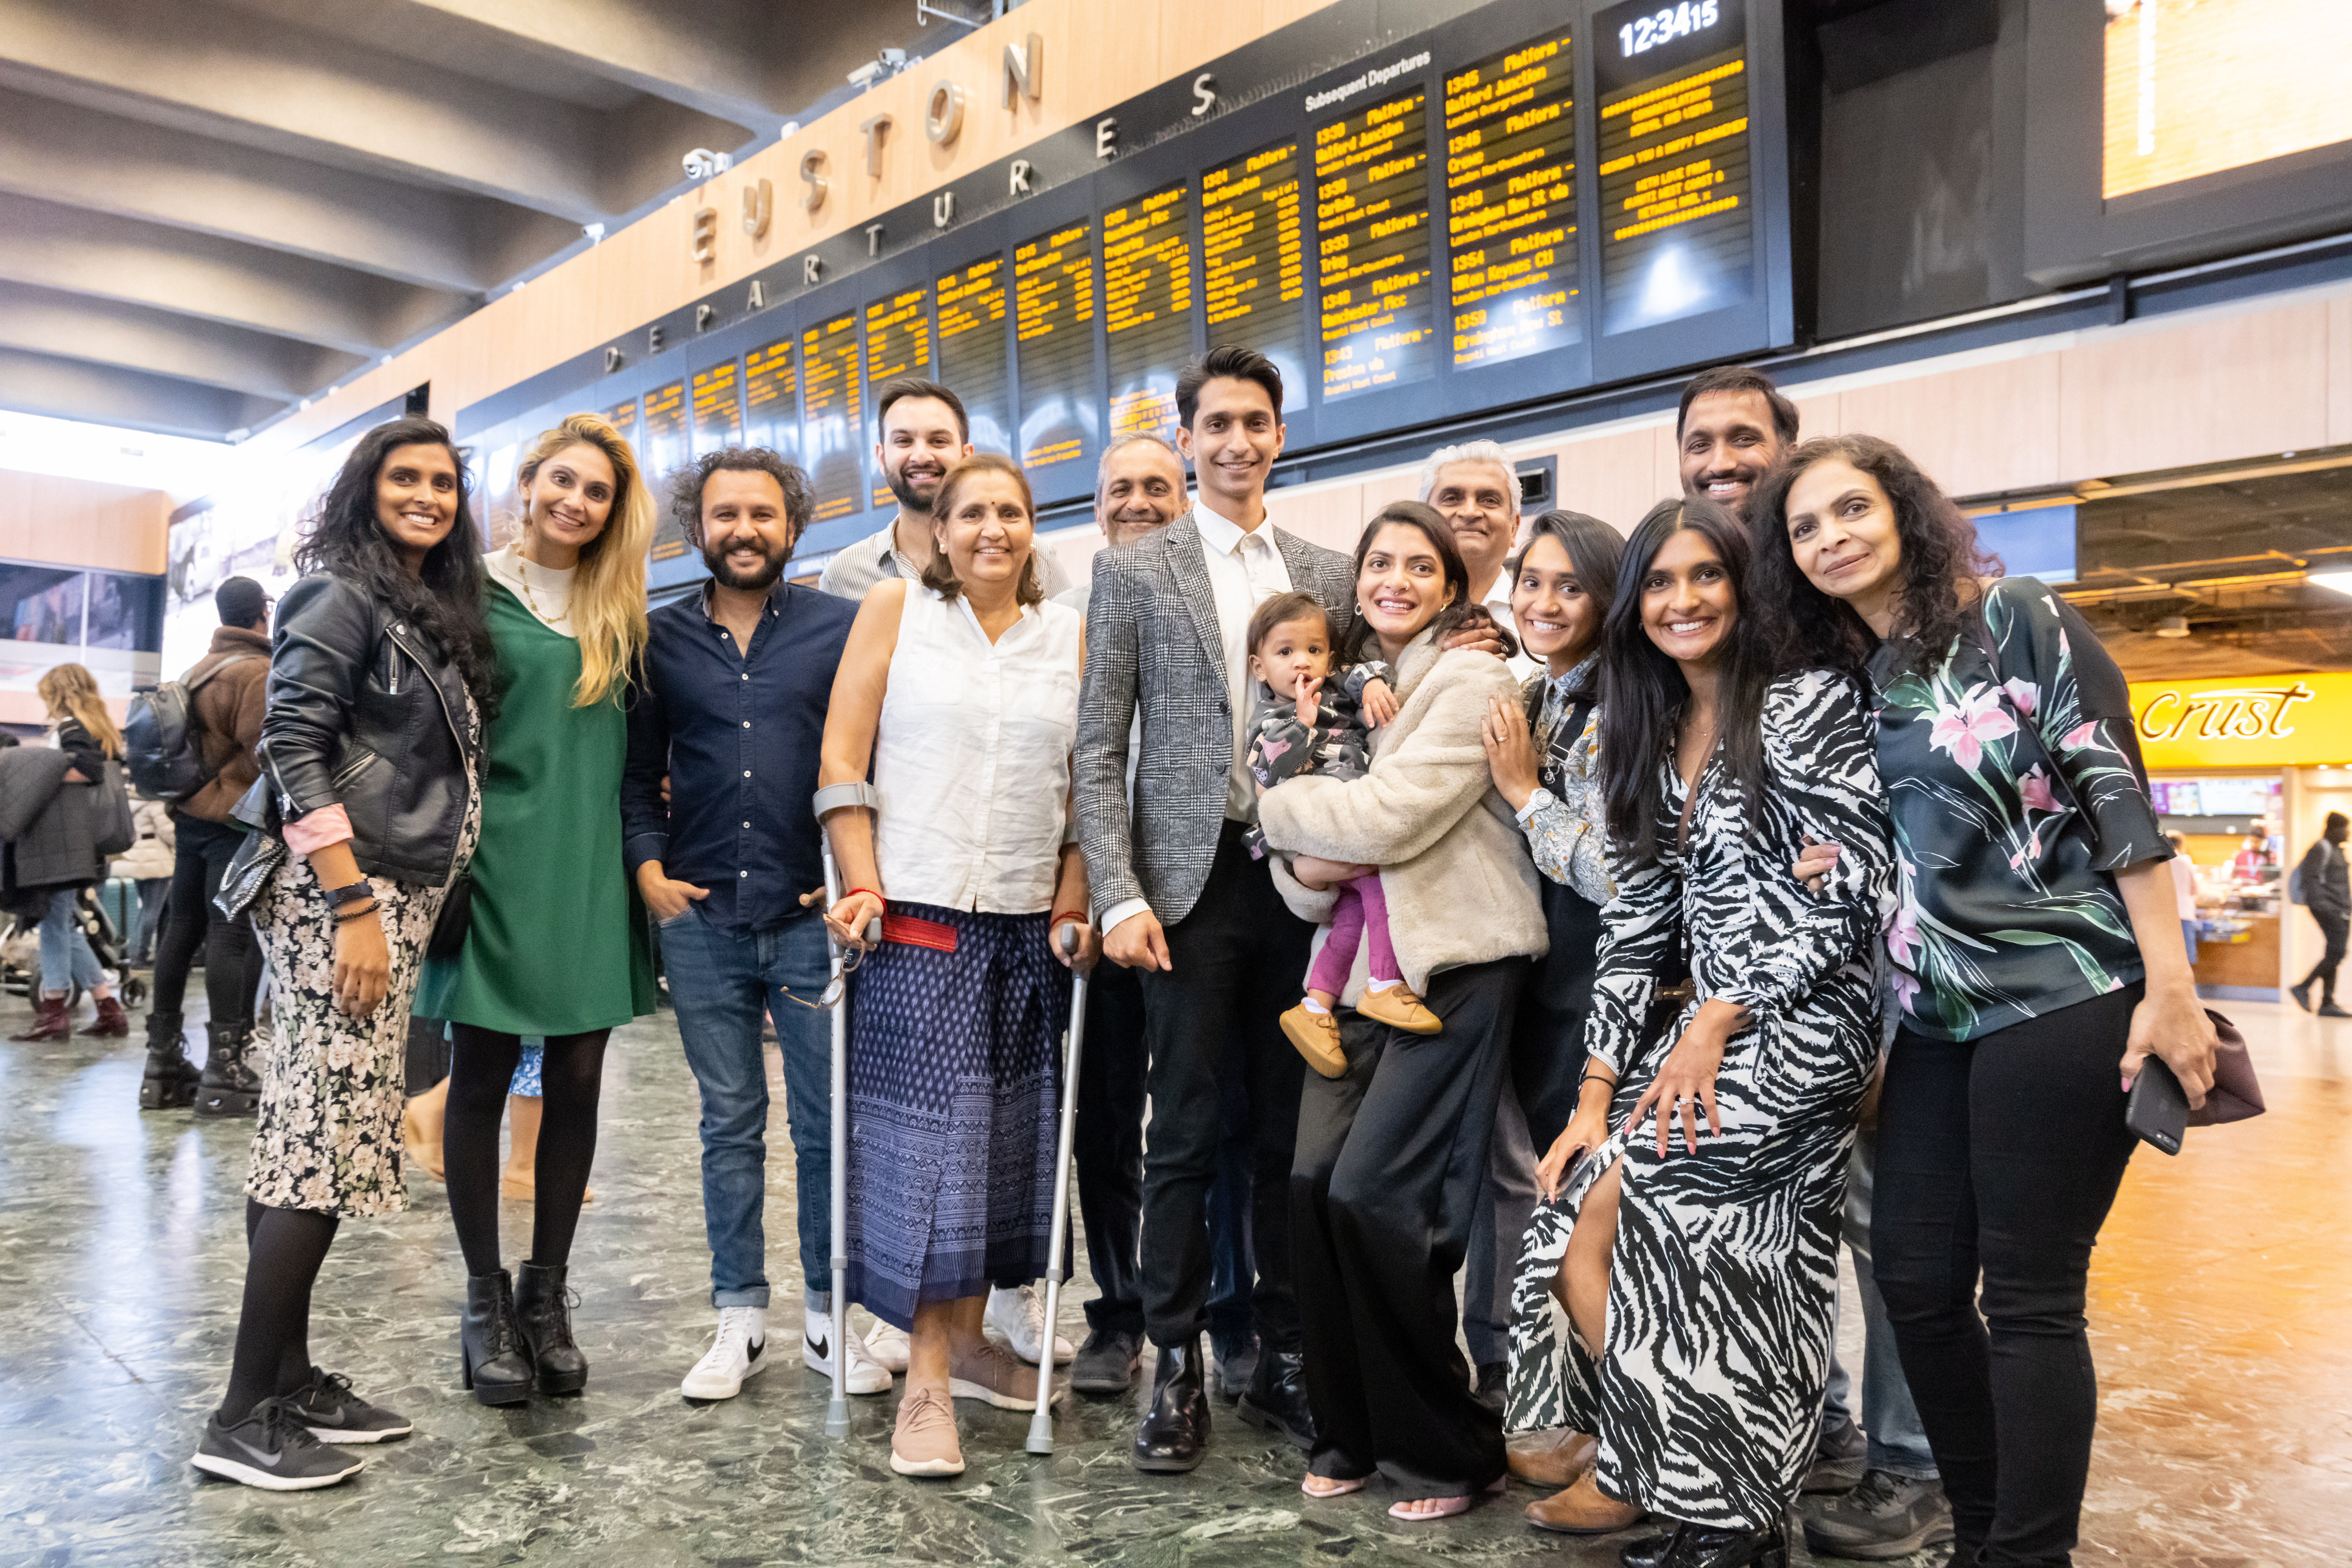 Nirmal Chohan and Vidya Patel with their family at Euston station